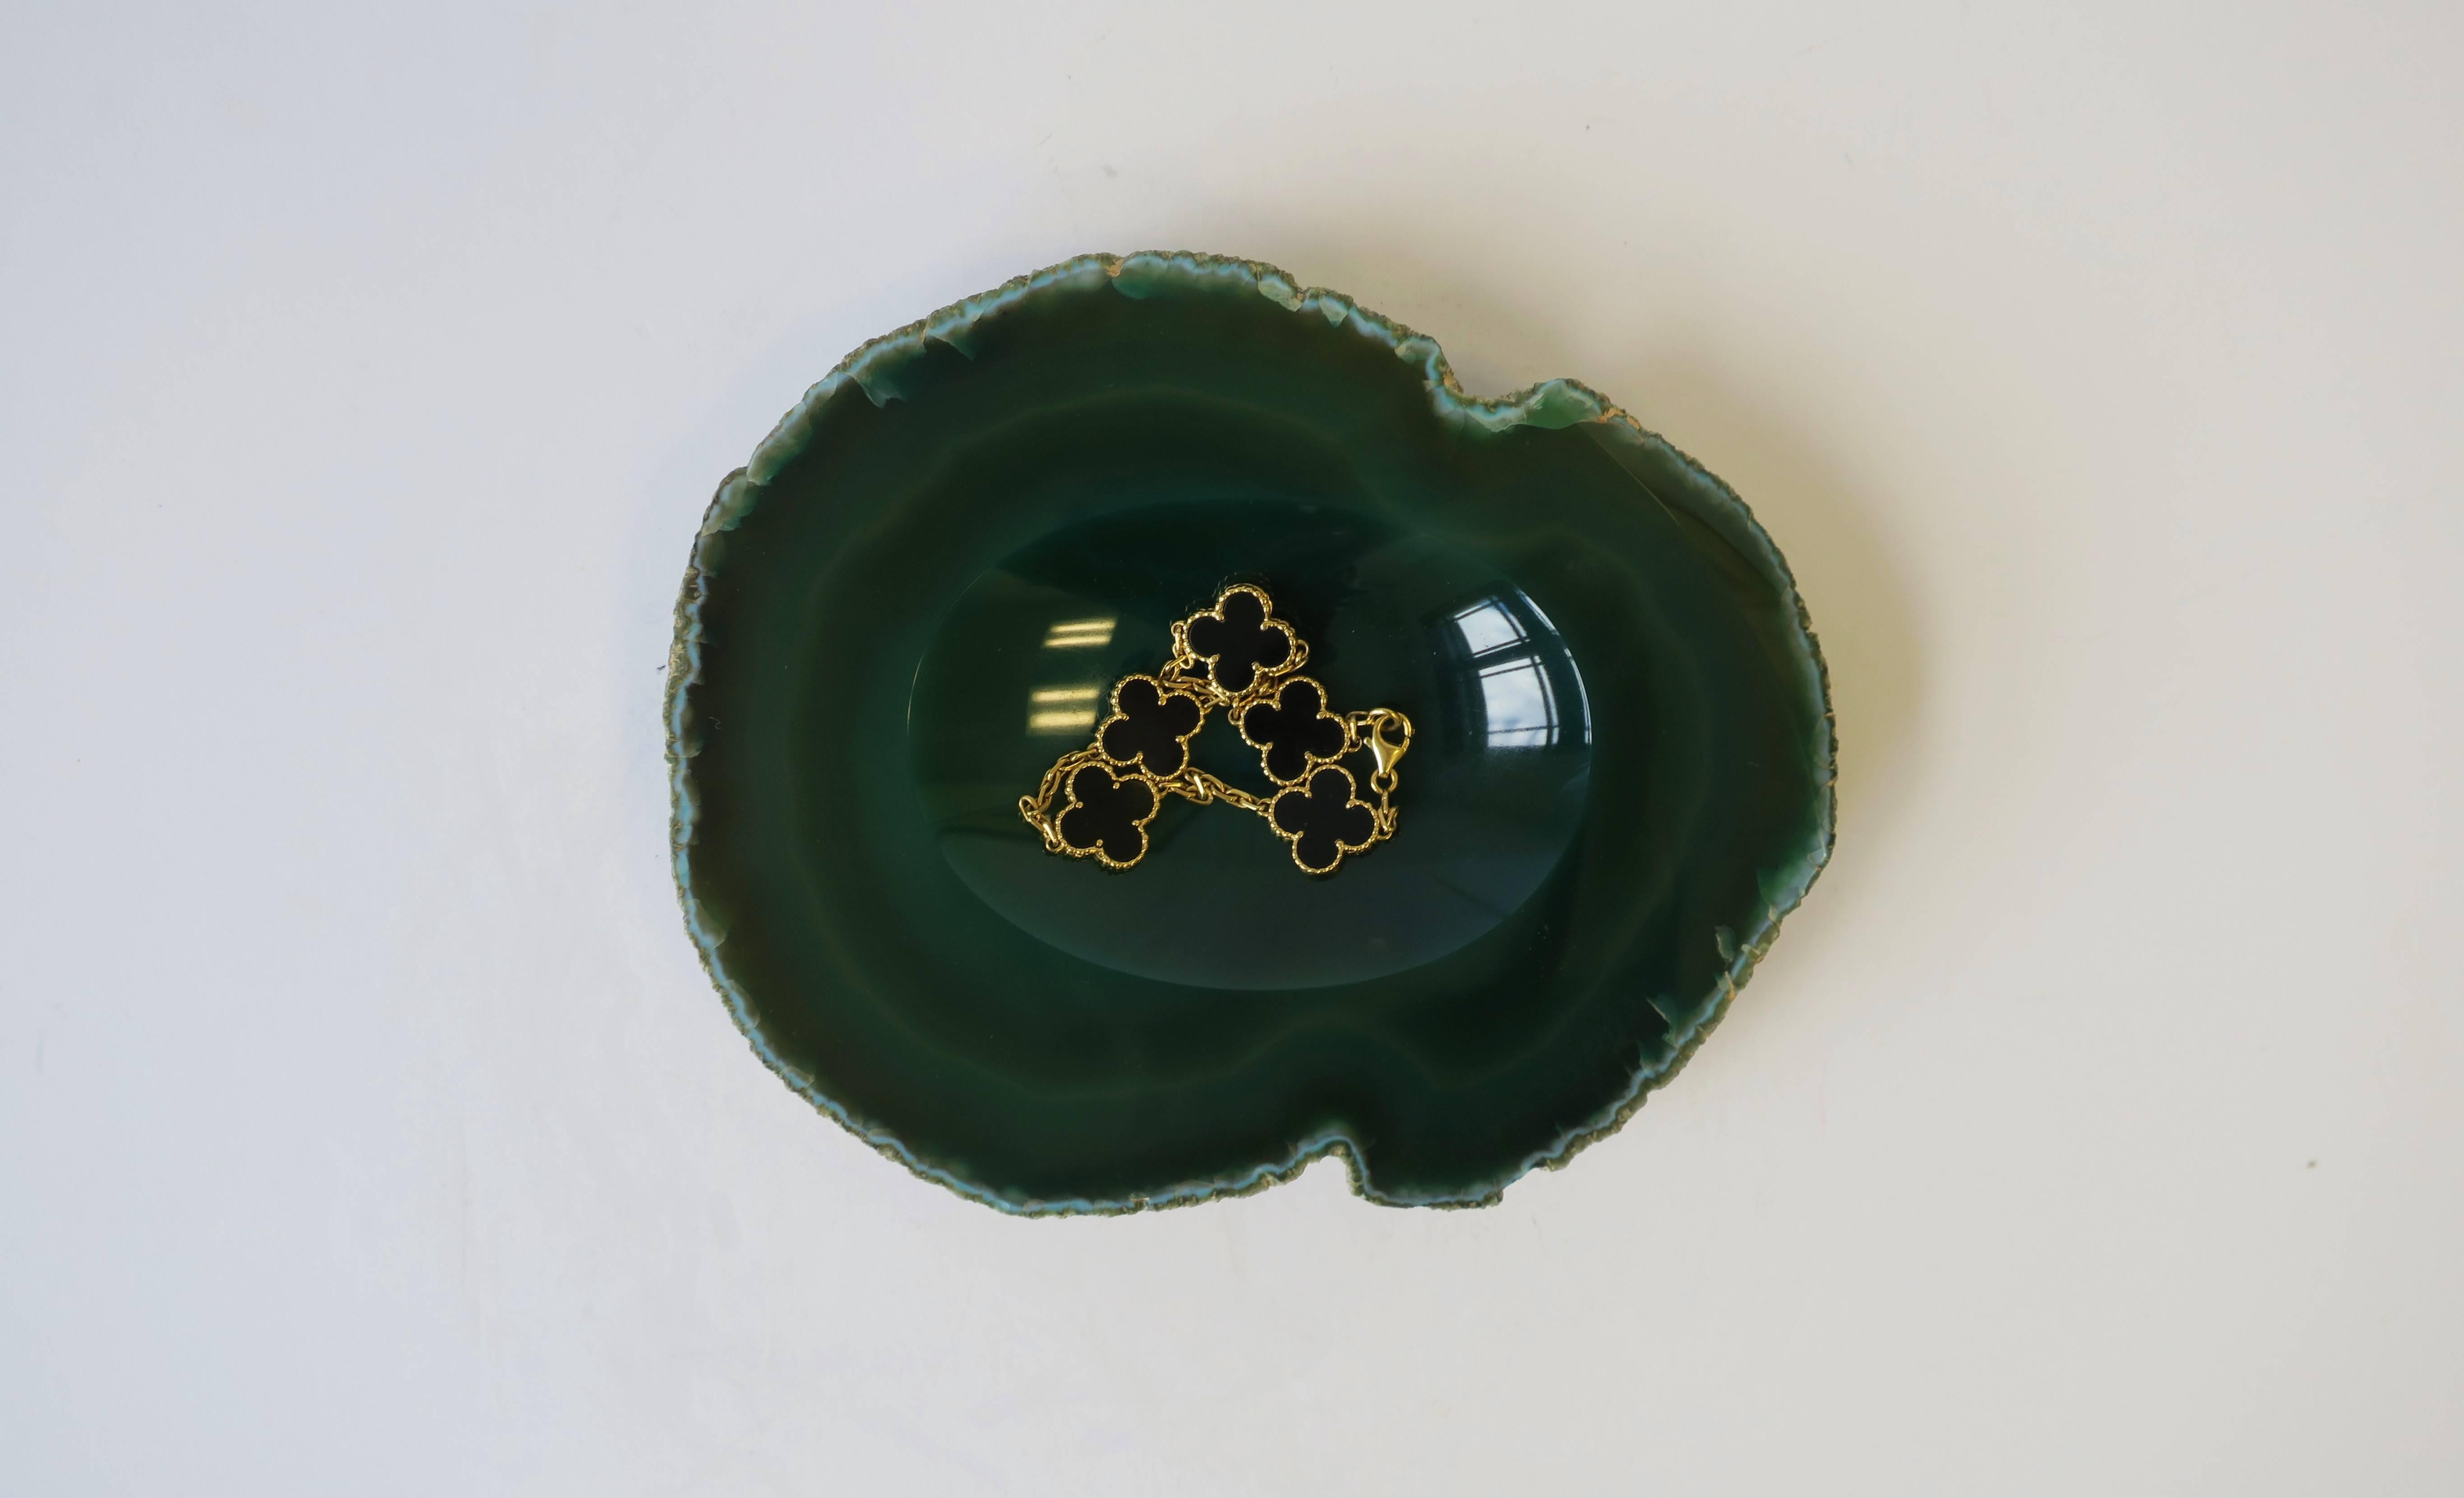 Polished Vintage Emerald Green Agate Geode Vessel Bowl or Decorative Object